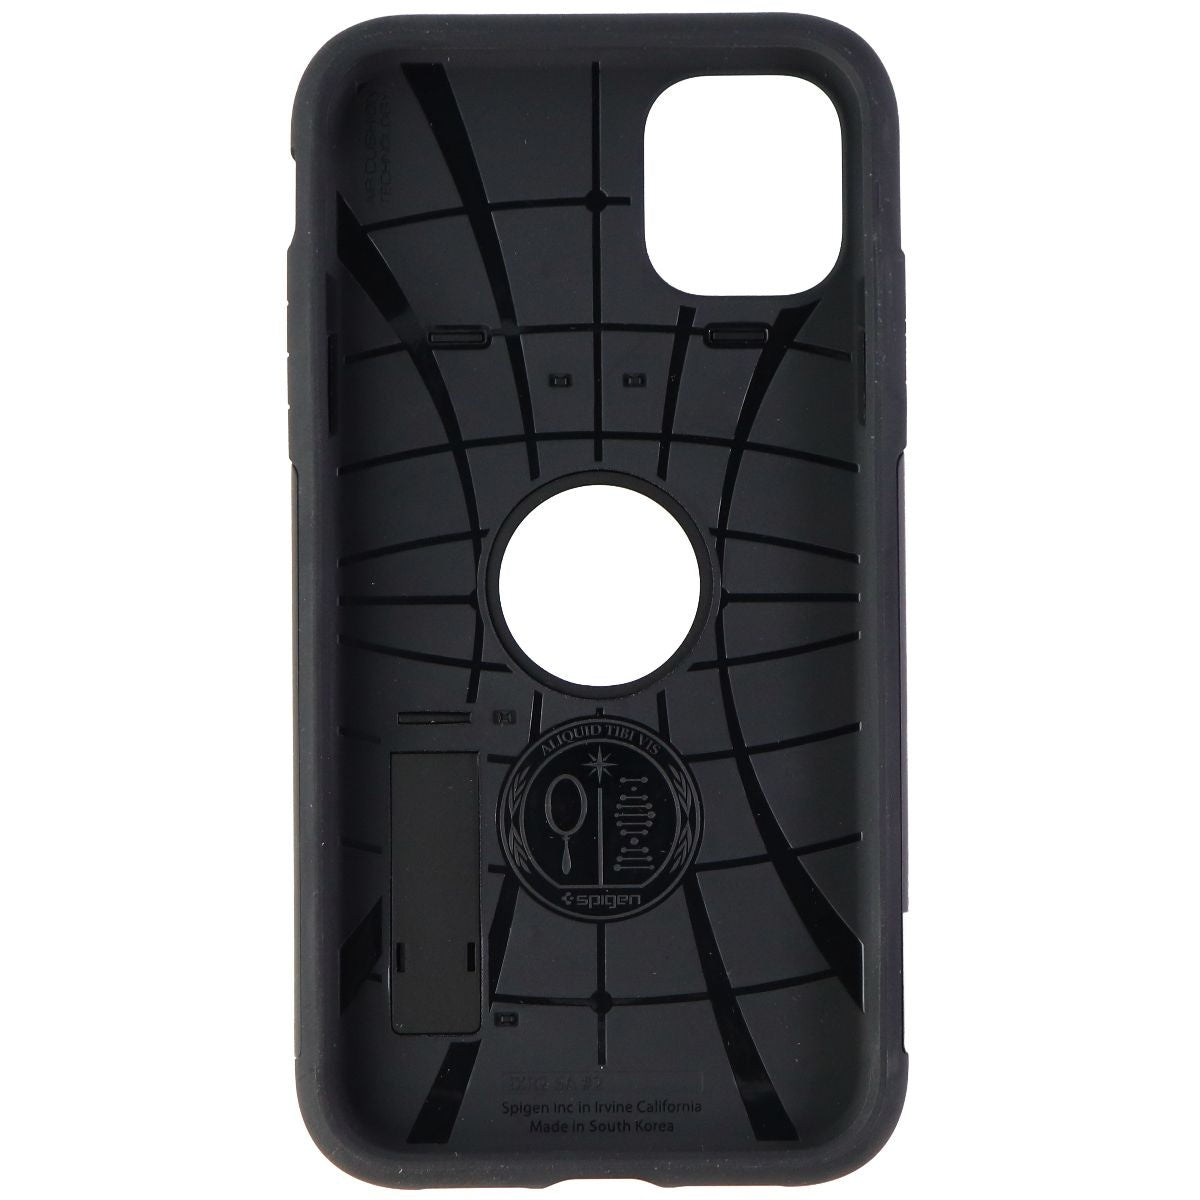 Spigen Slim Armor Series Case for Apple iPhone 11 - Black Cell Phone - Cases, Covers & Skins Spigen    - Simple Cell Bulk Wholesale Pricing - USA Seller